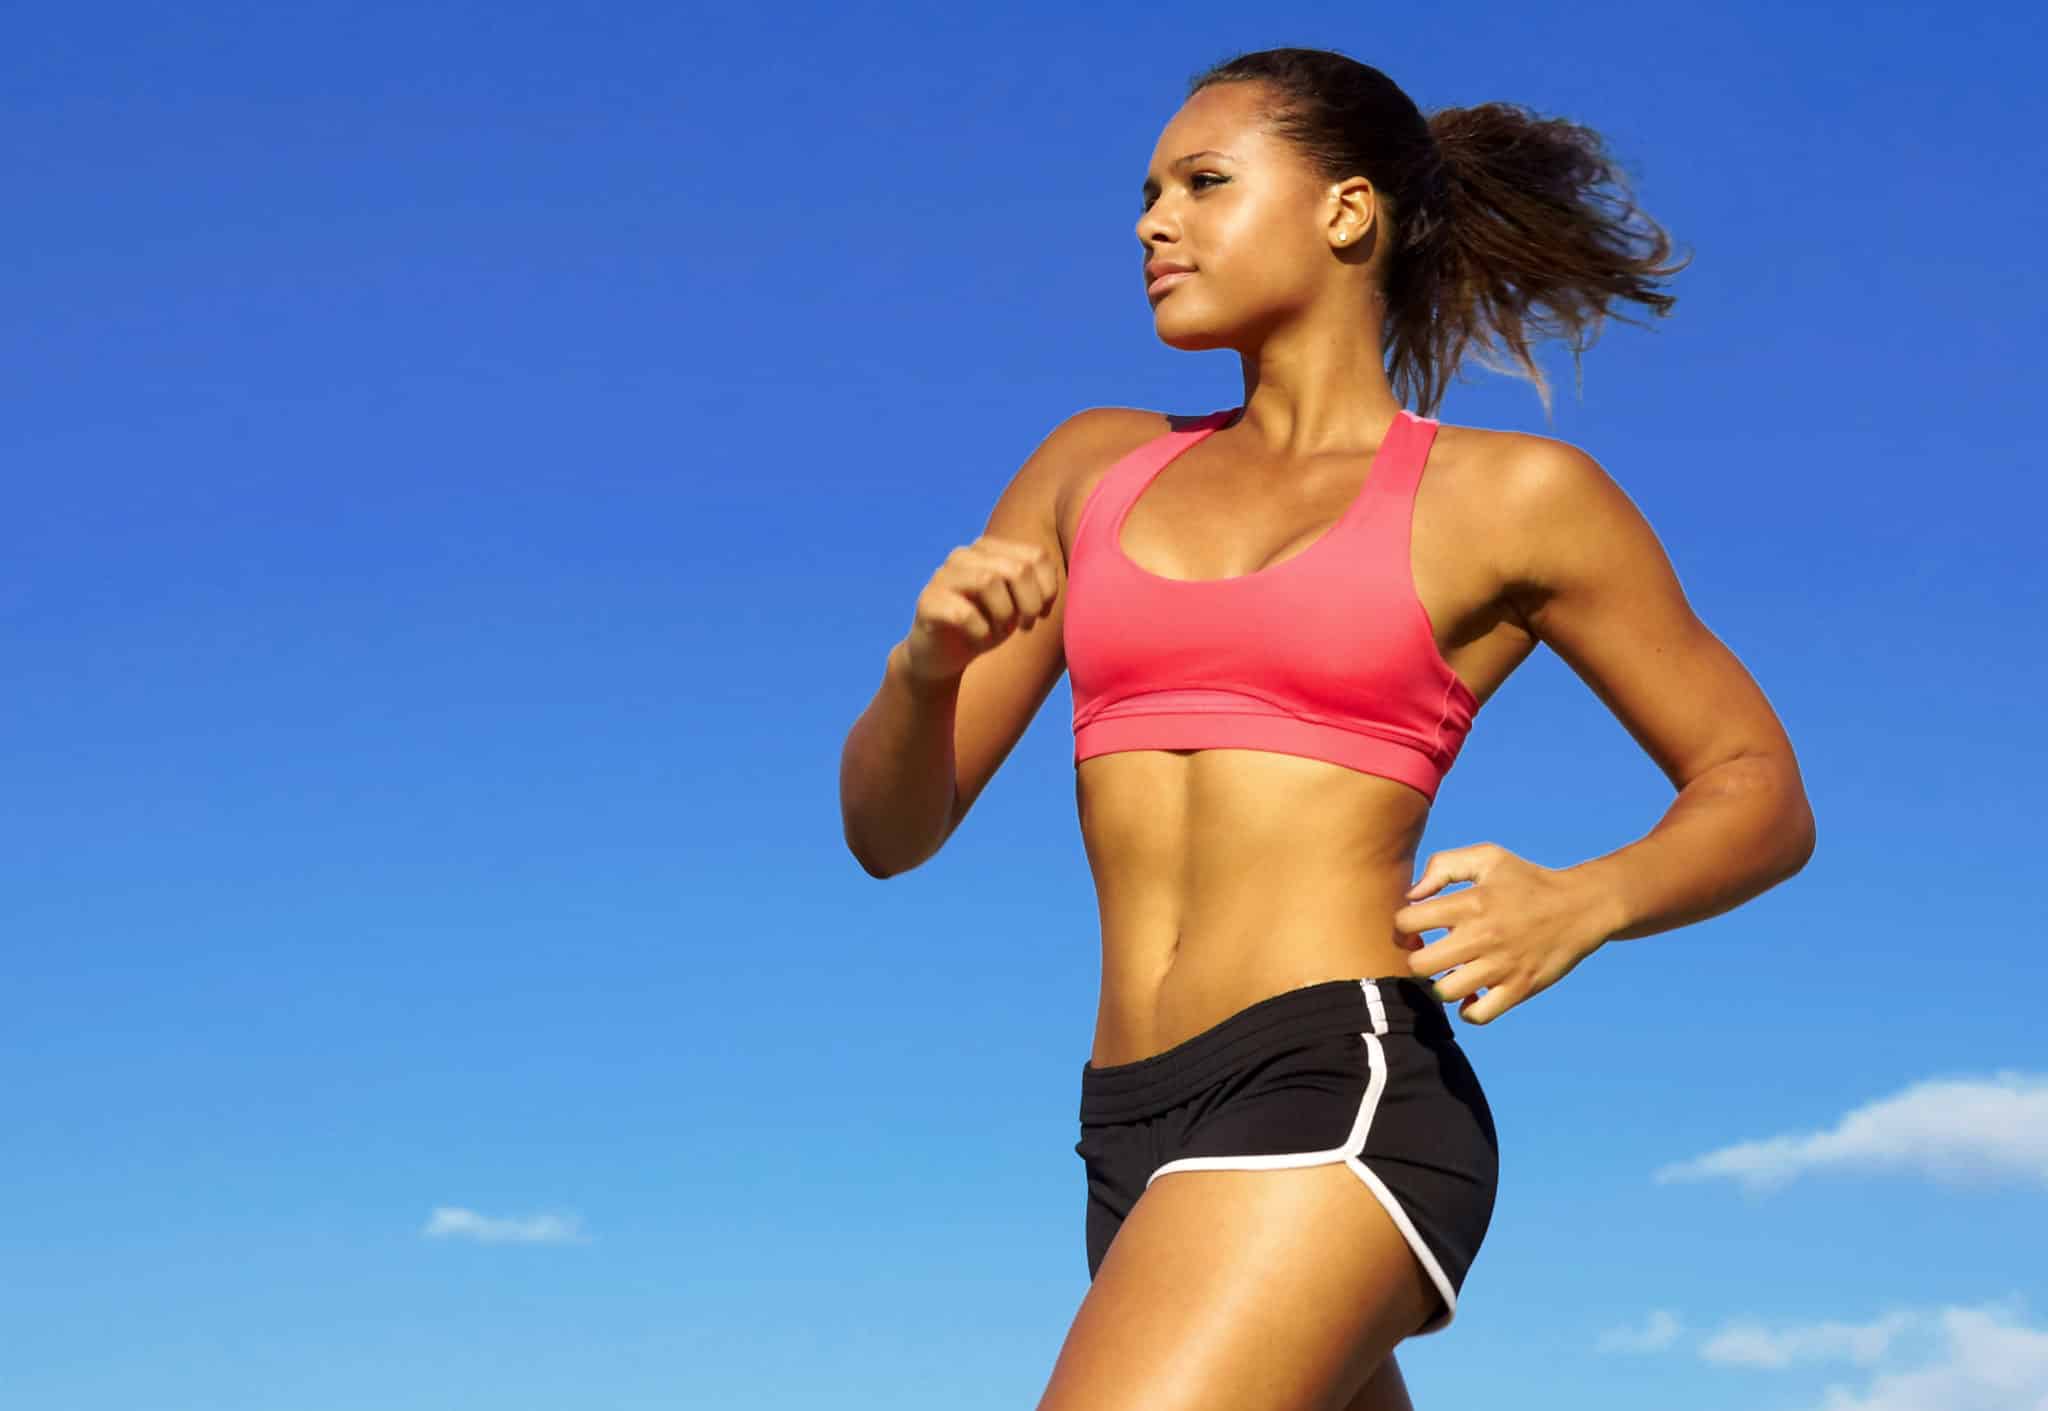 Woman running in sports bra